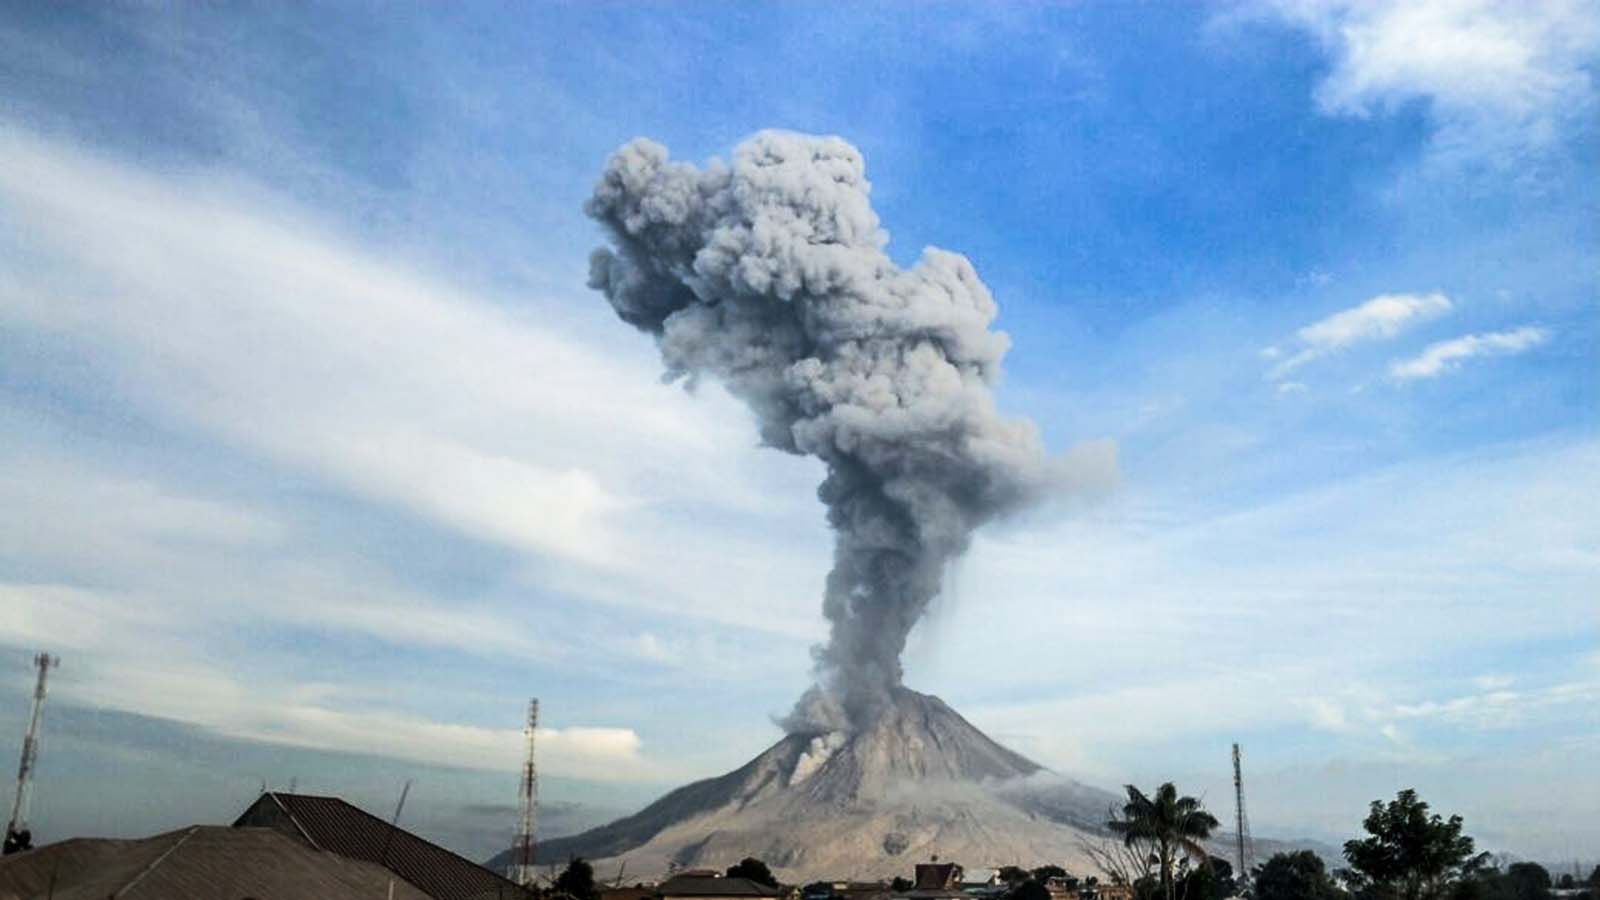 sinabung eruption on July 20 2017, sinabung eruption on July 20 2017 picture, sinabung eruption on July 20 2017 video